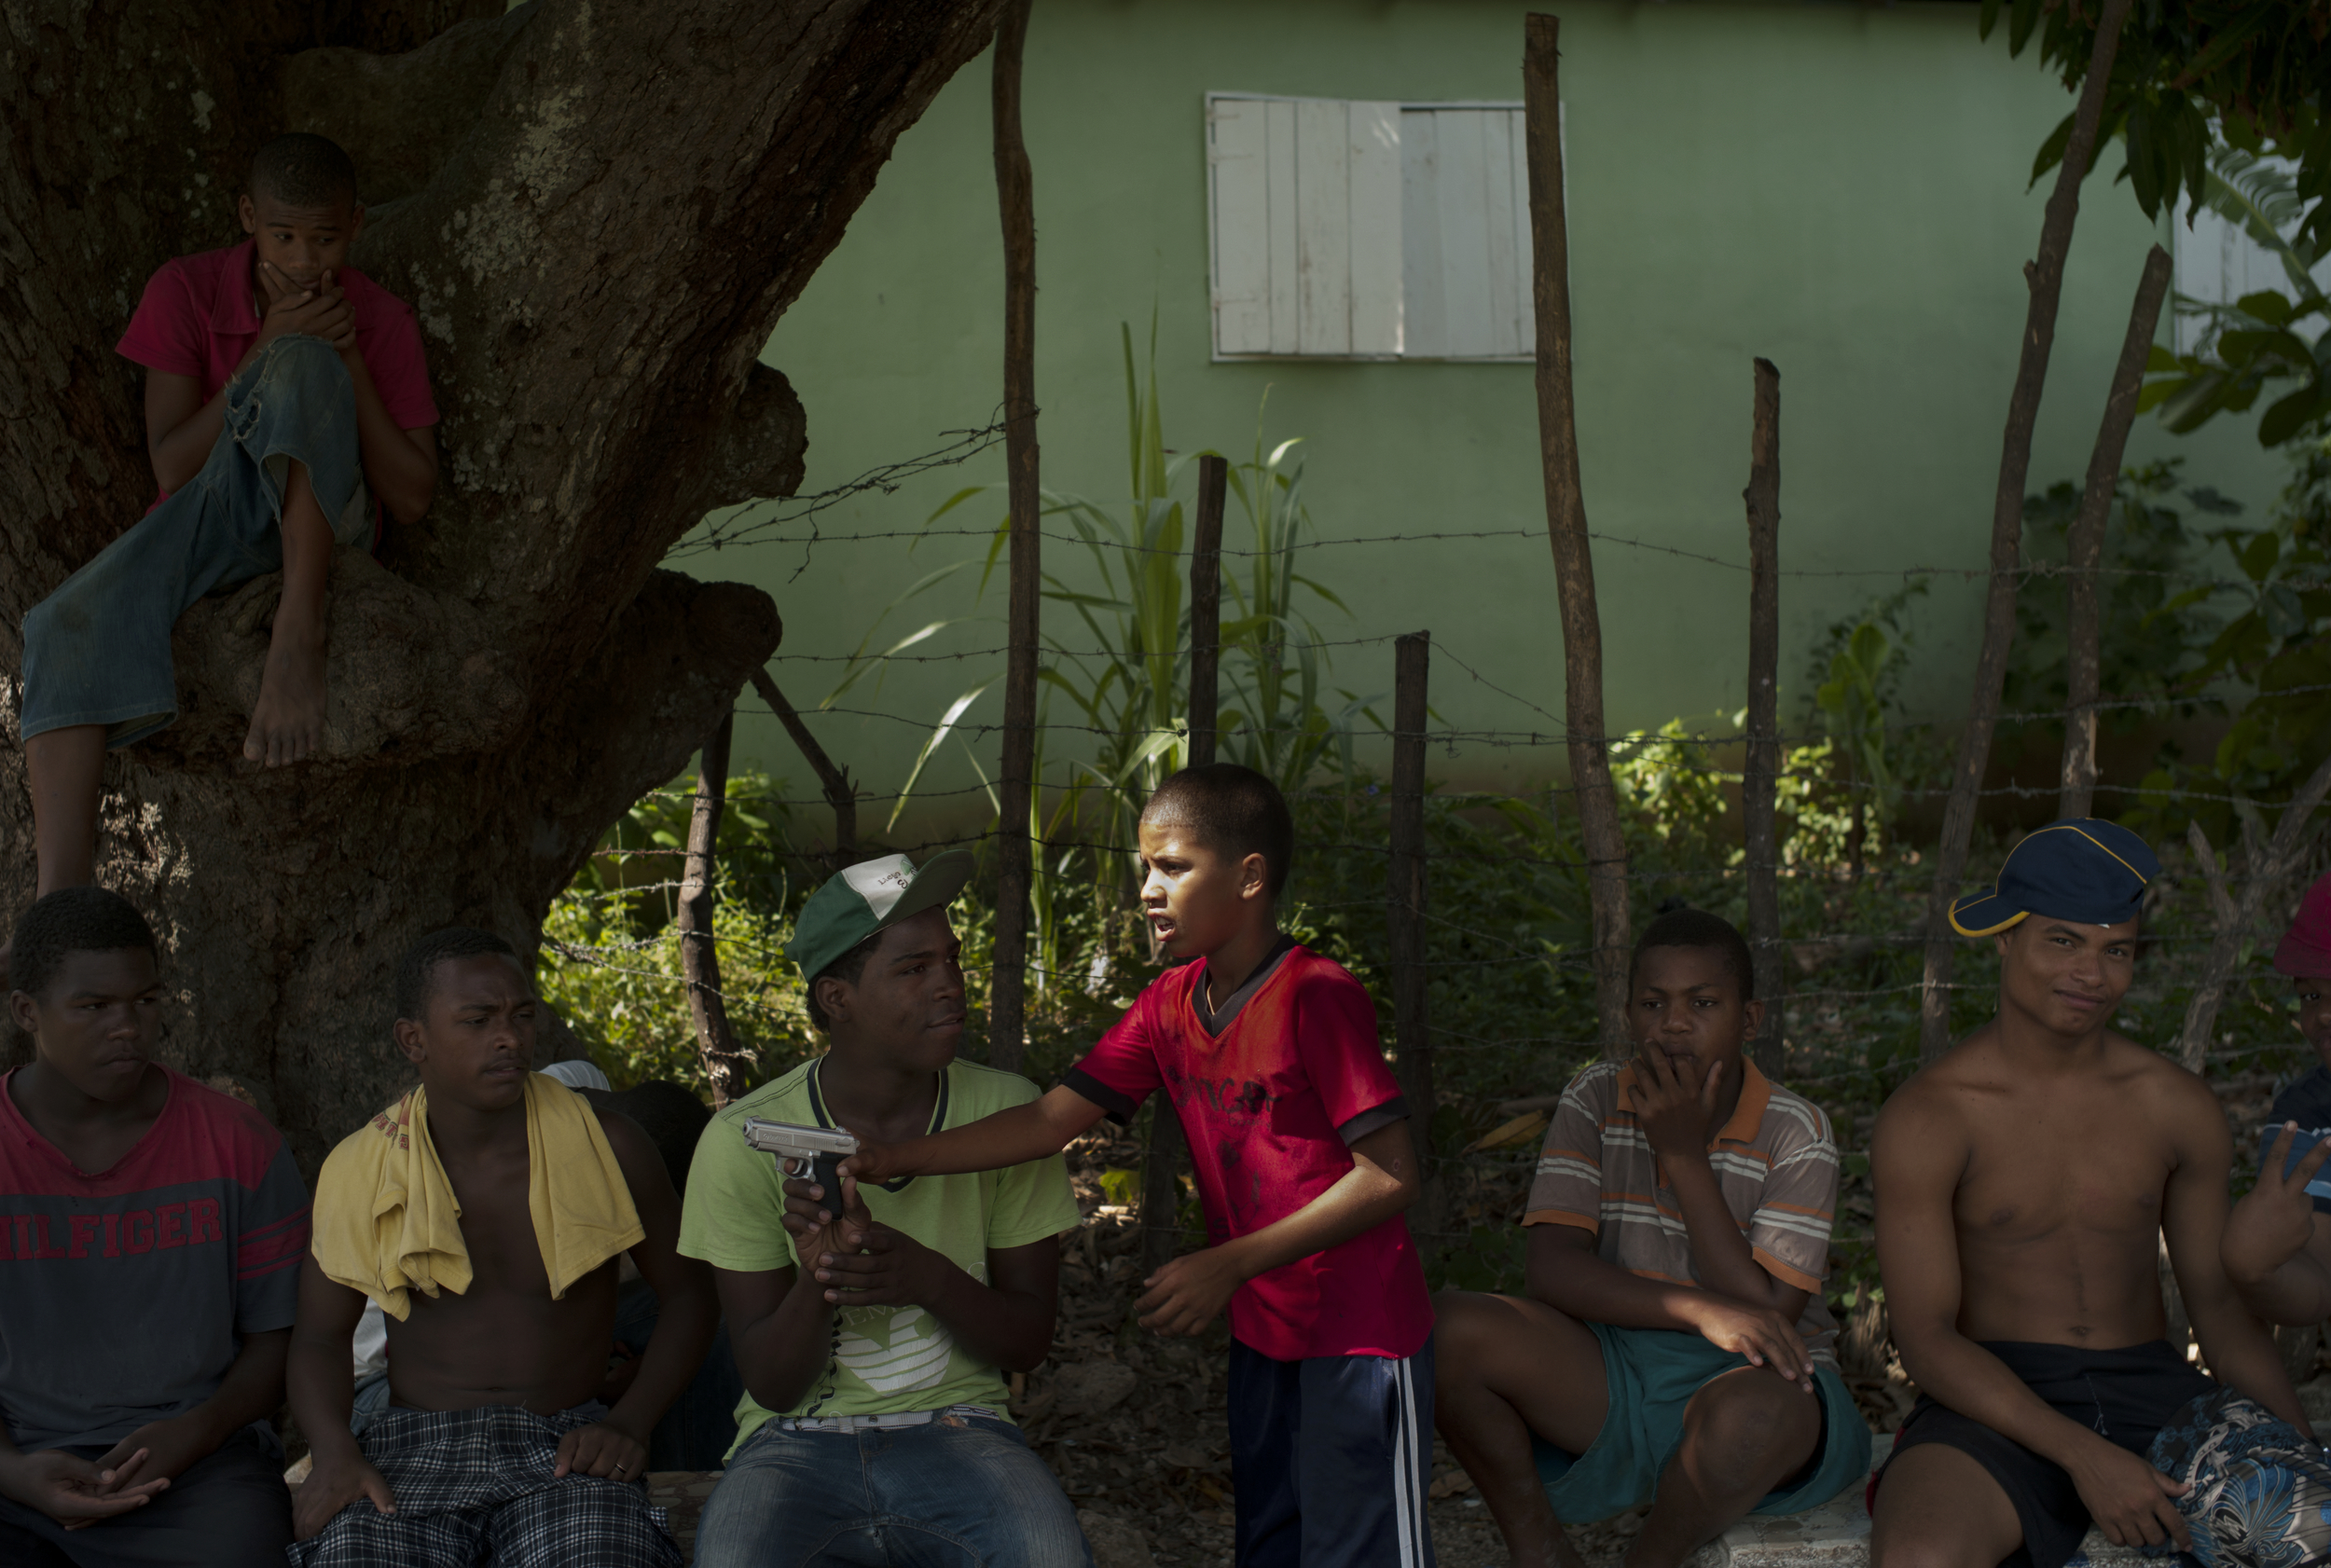  Kids play with a toy gun,&nbsp; Paraiso, Dominican Republic.  